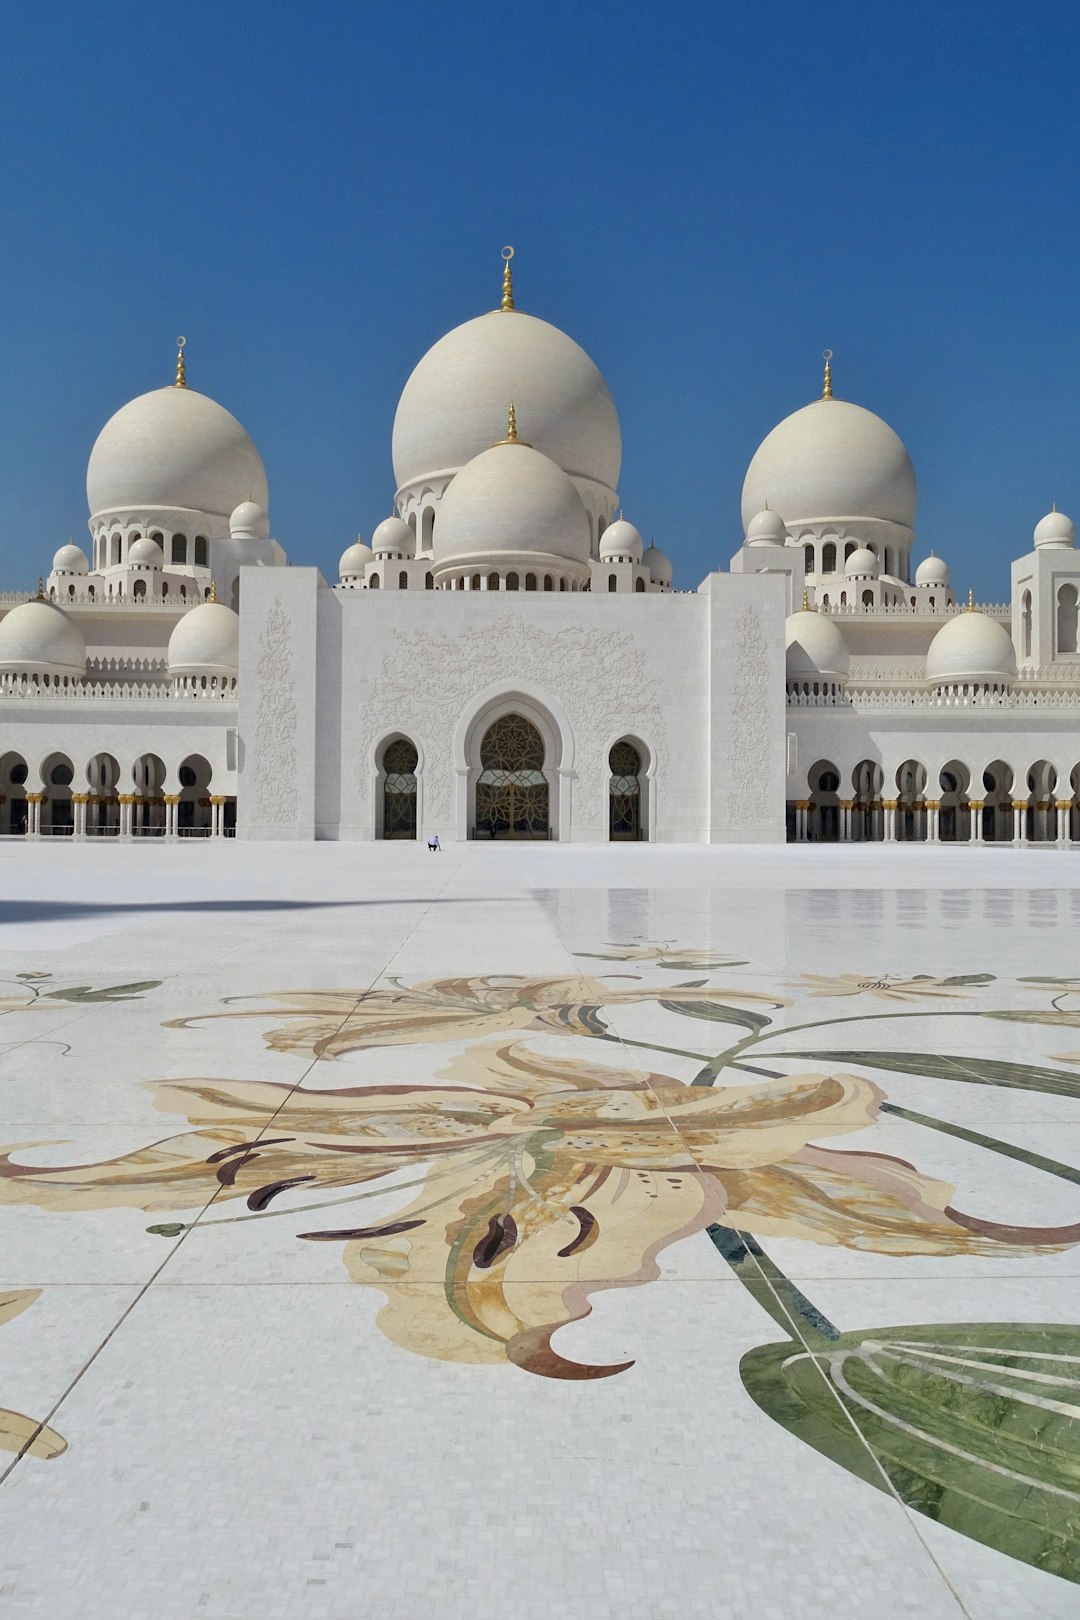 Landmark photo spot Al Rawdah - Abu Dhabi - United Arab Emirates Sheikh Zayed Grand Mosque Center